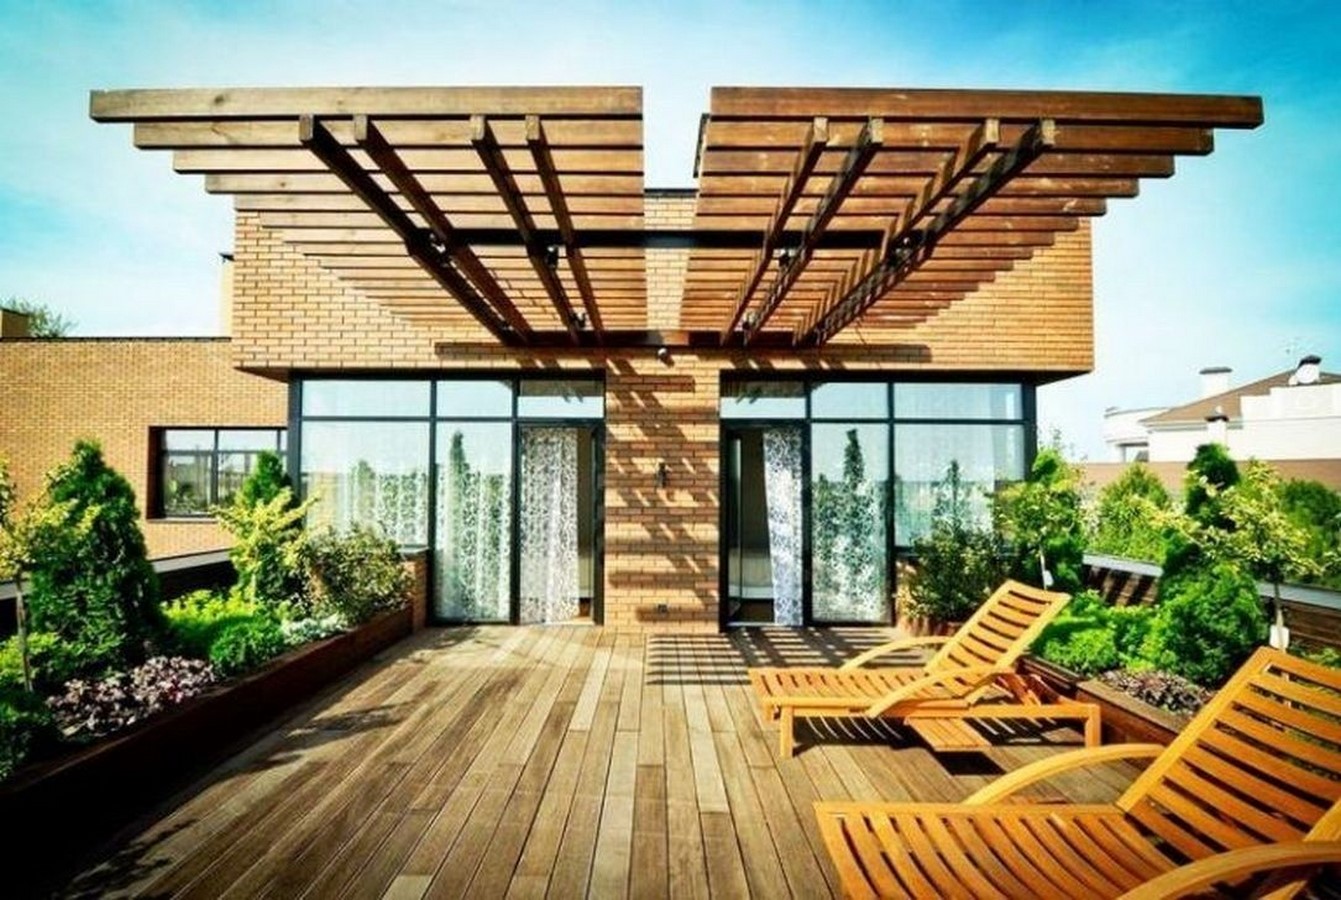 How to design a rooftop garden